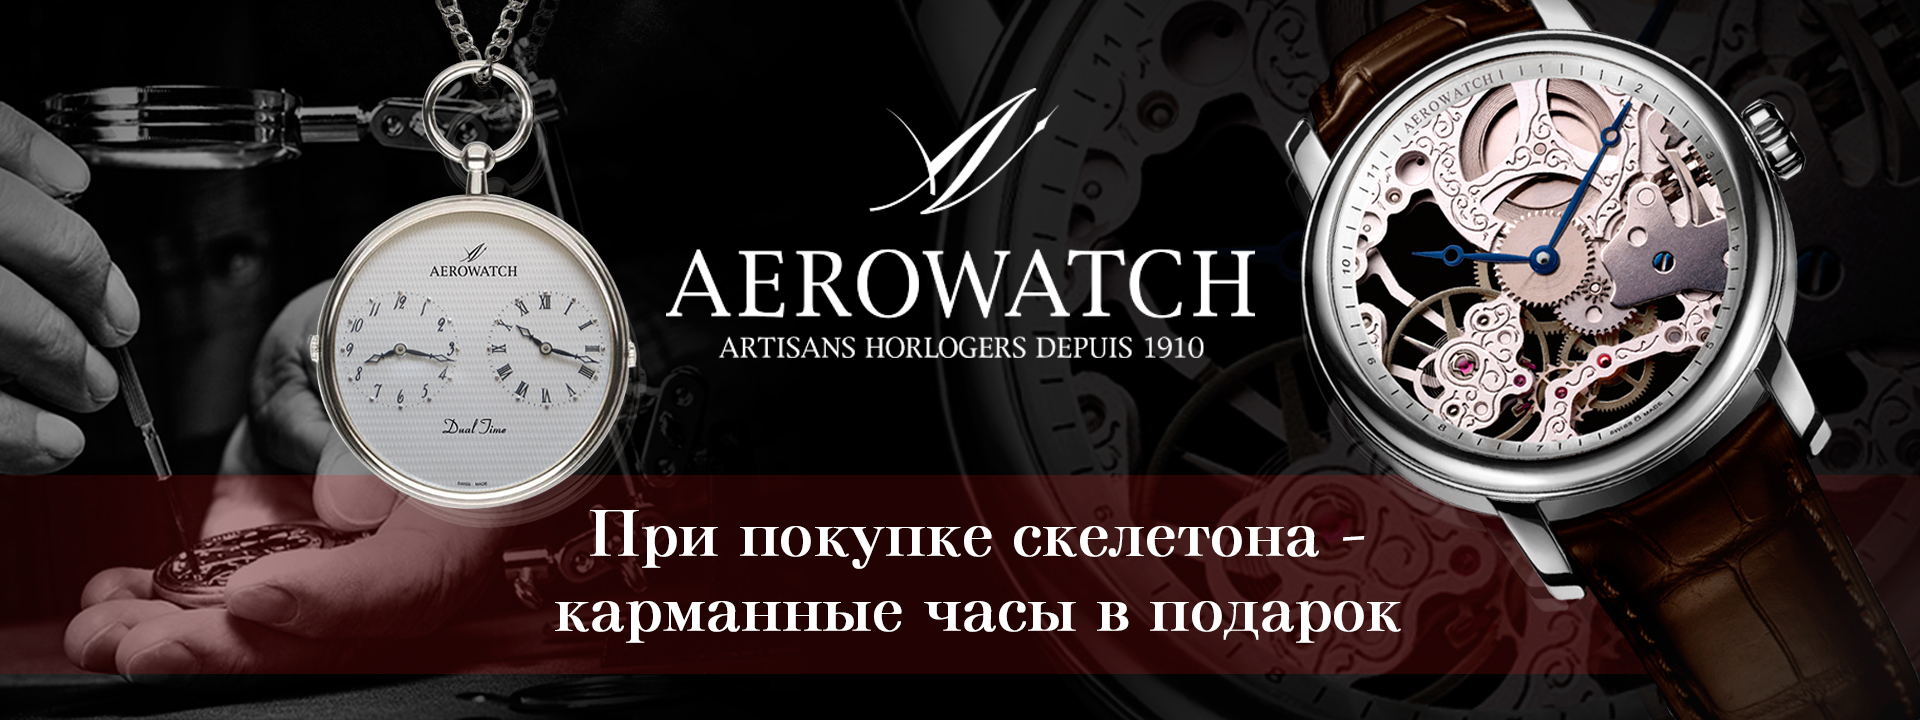 Aerowatch - 1